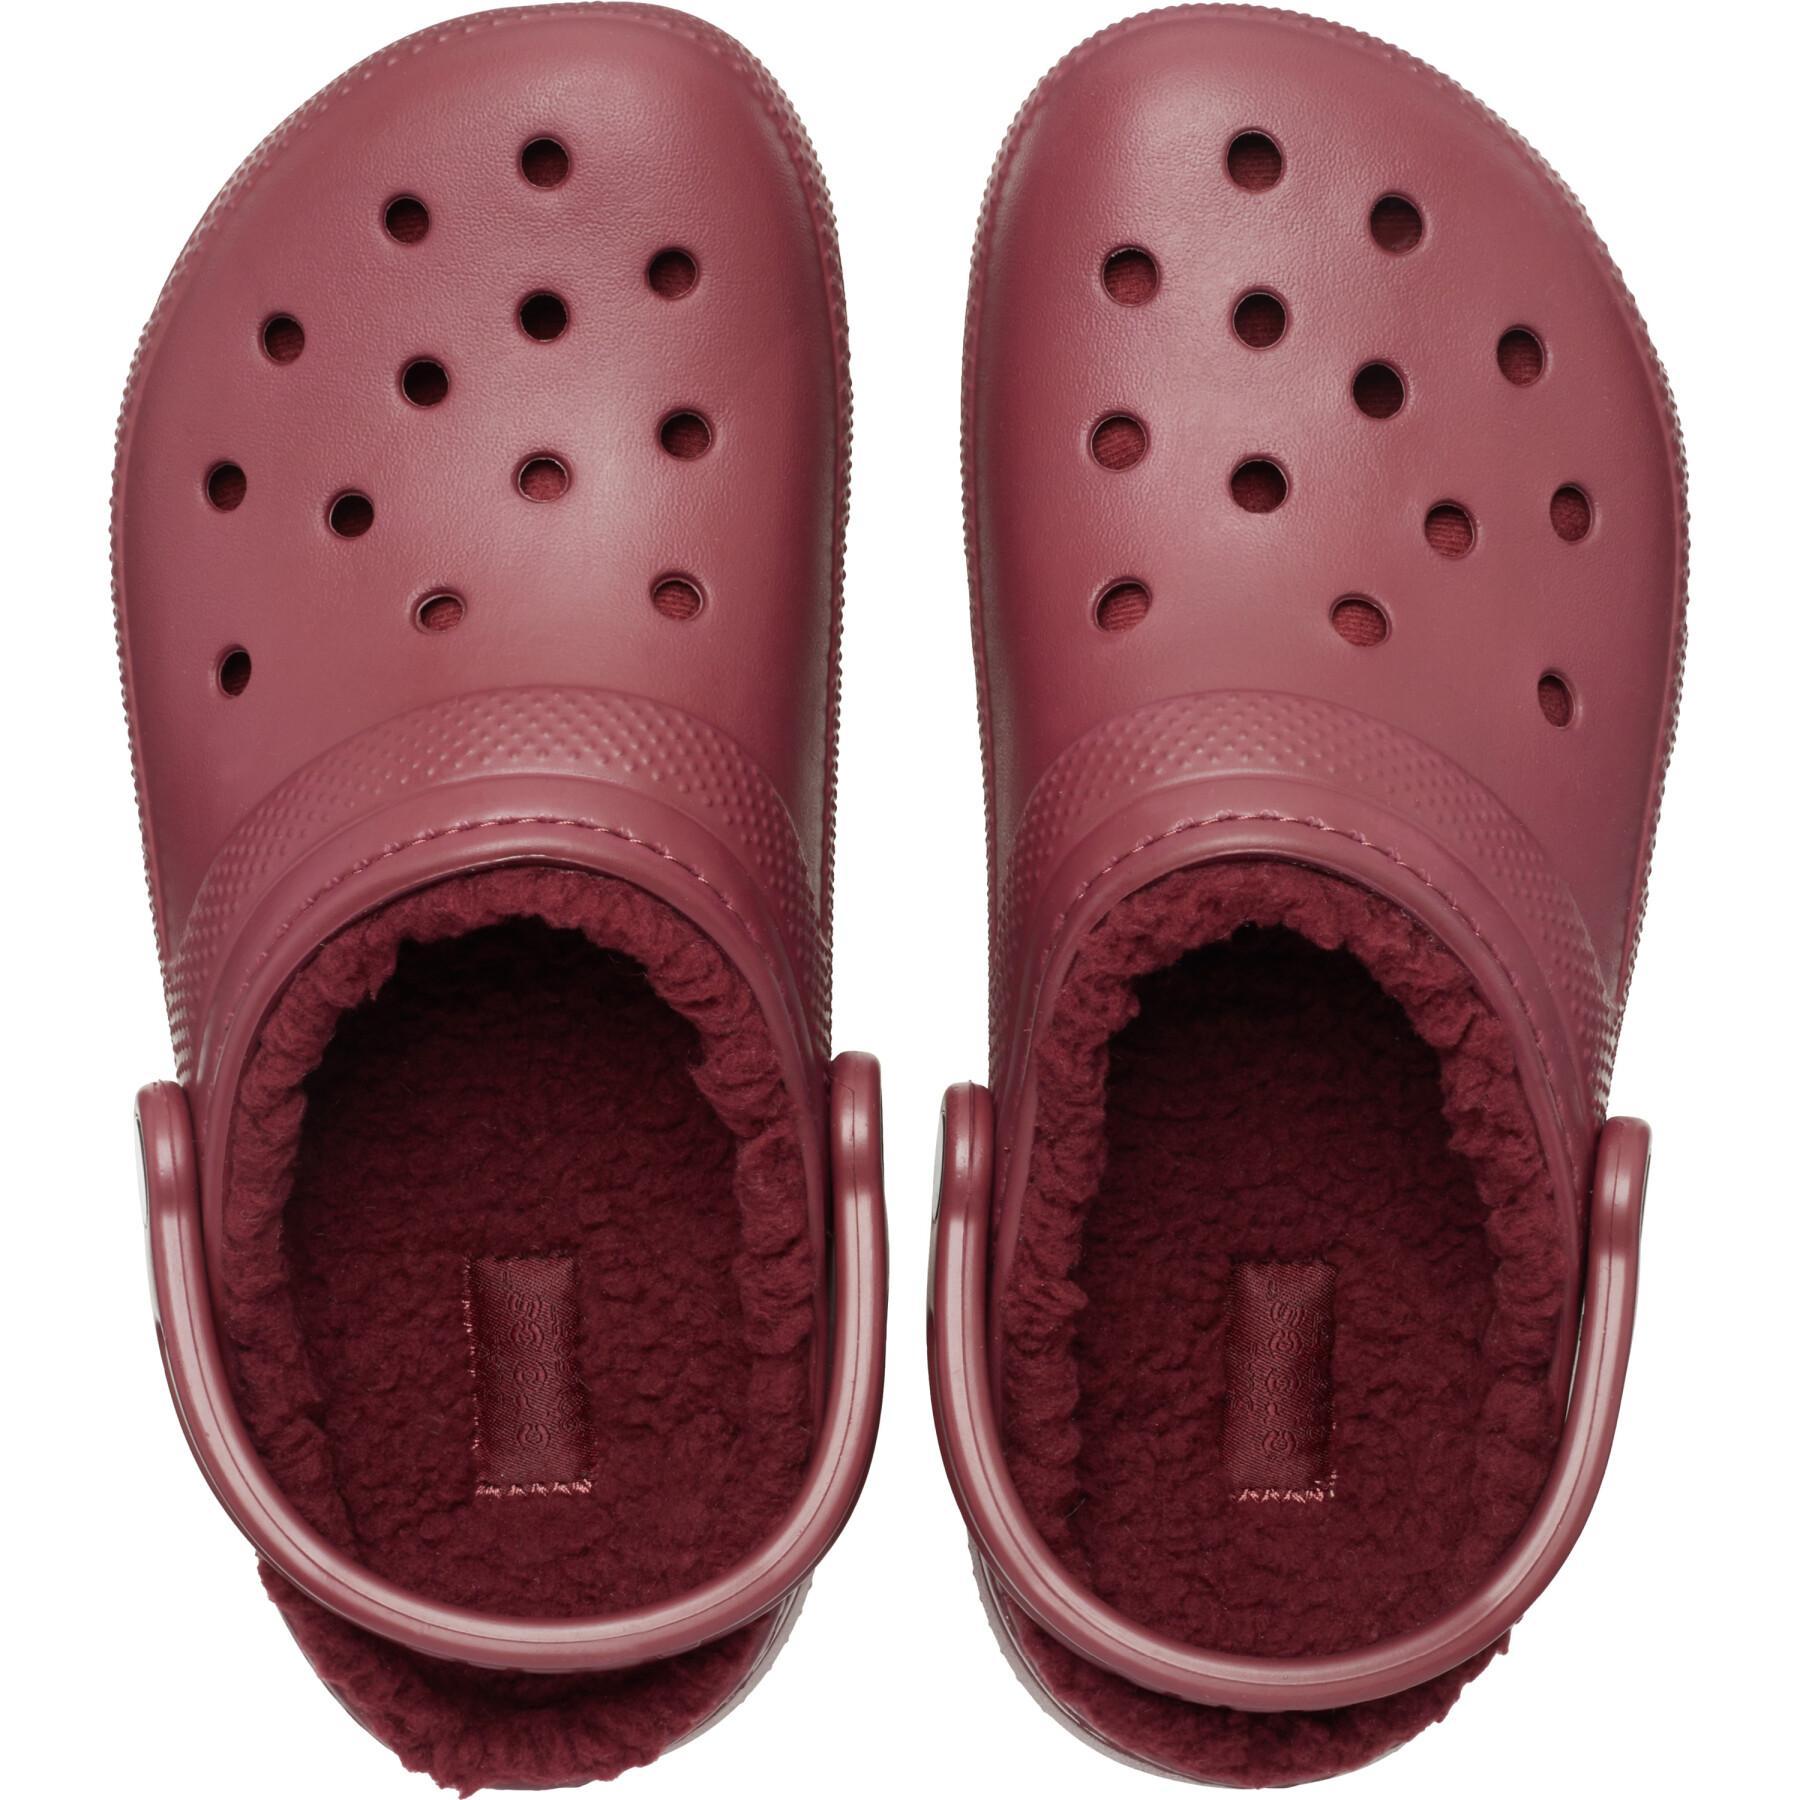 Tamancos Crocs Classic Lined Clog